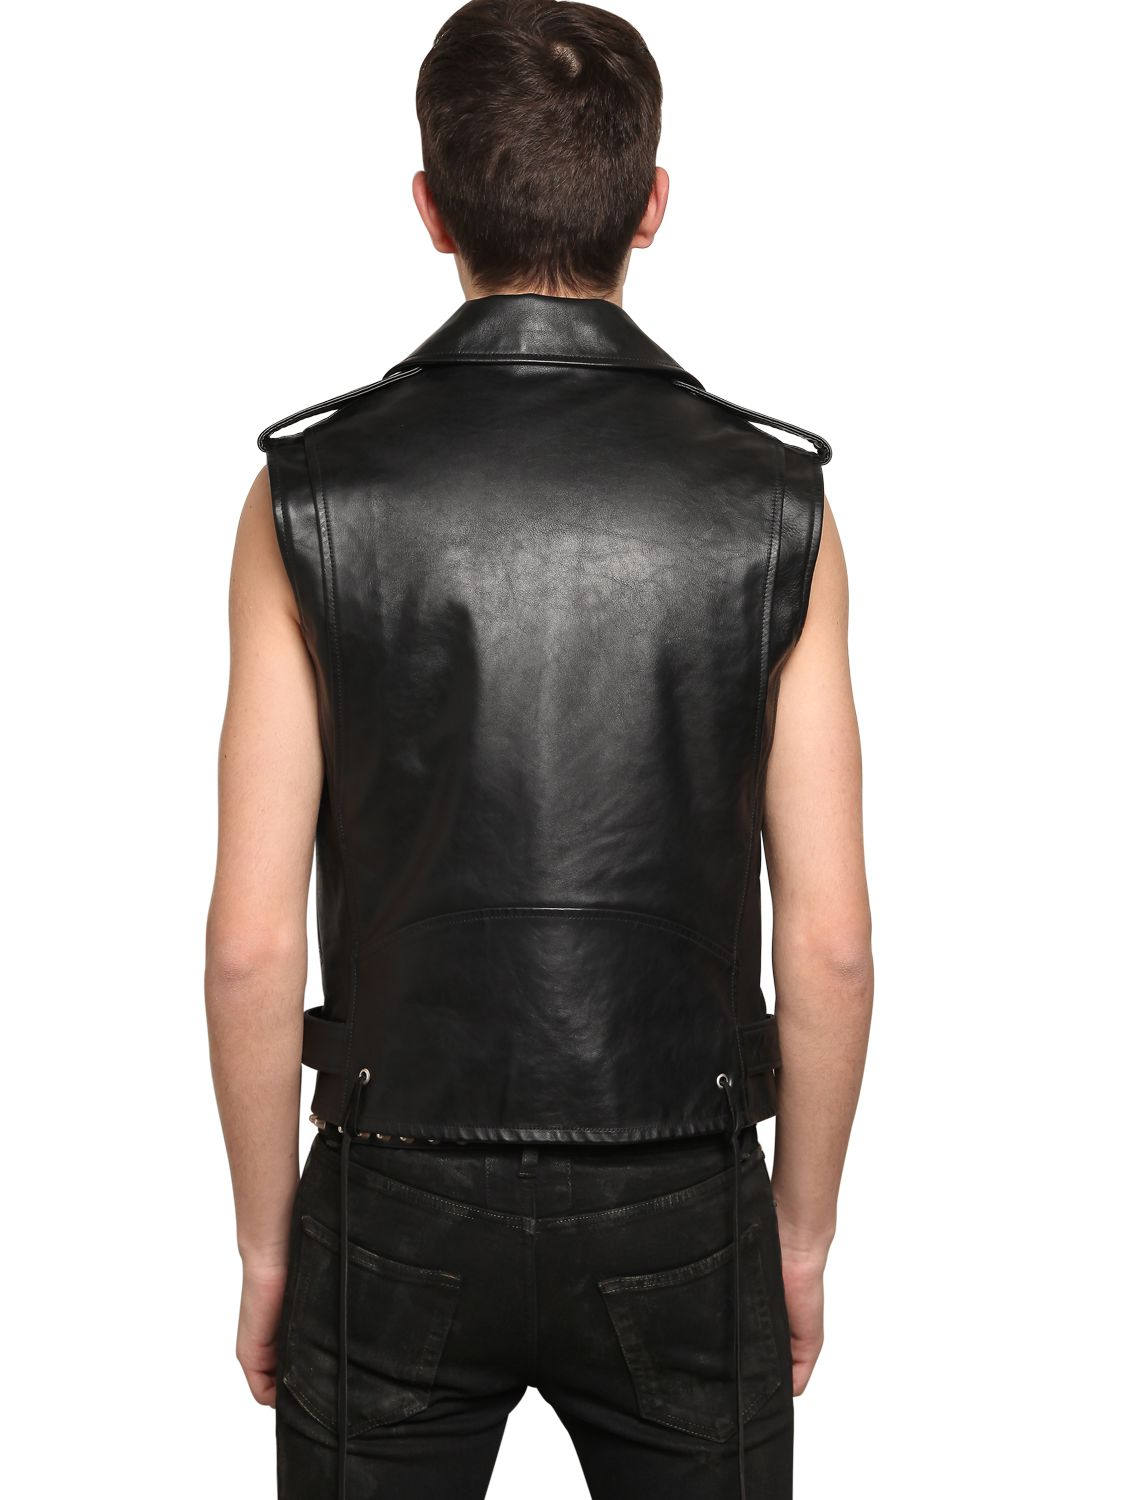 Lyst - Saint Laurent Leather Biker Vest in Black for Men